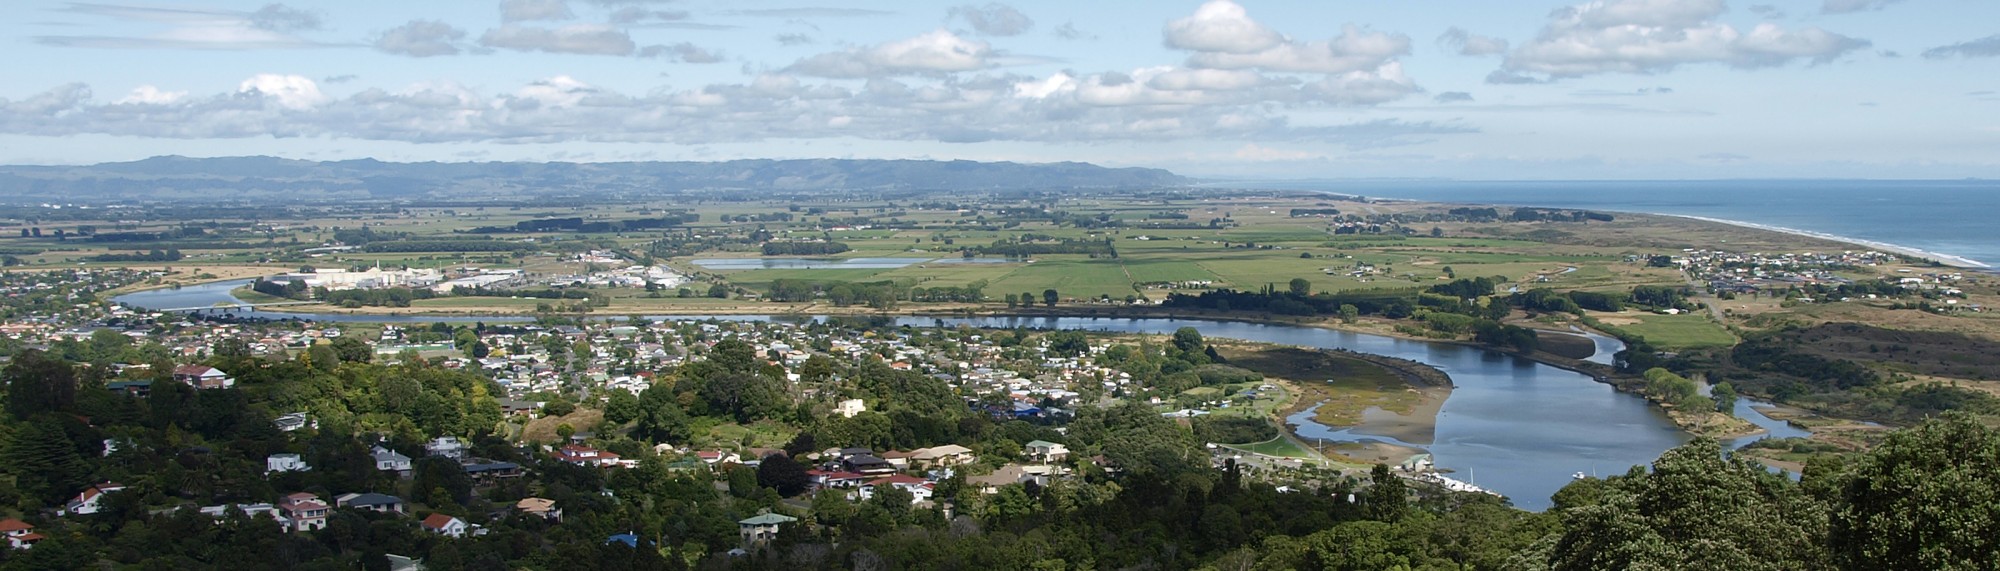 Whakatane with River and Hinterland